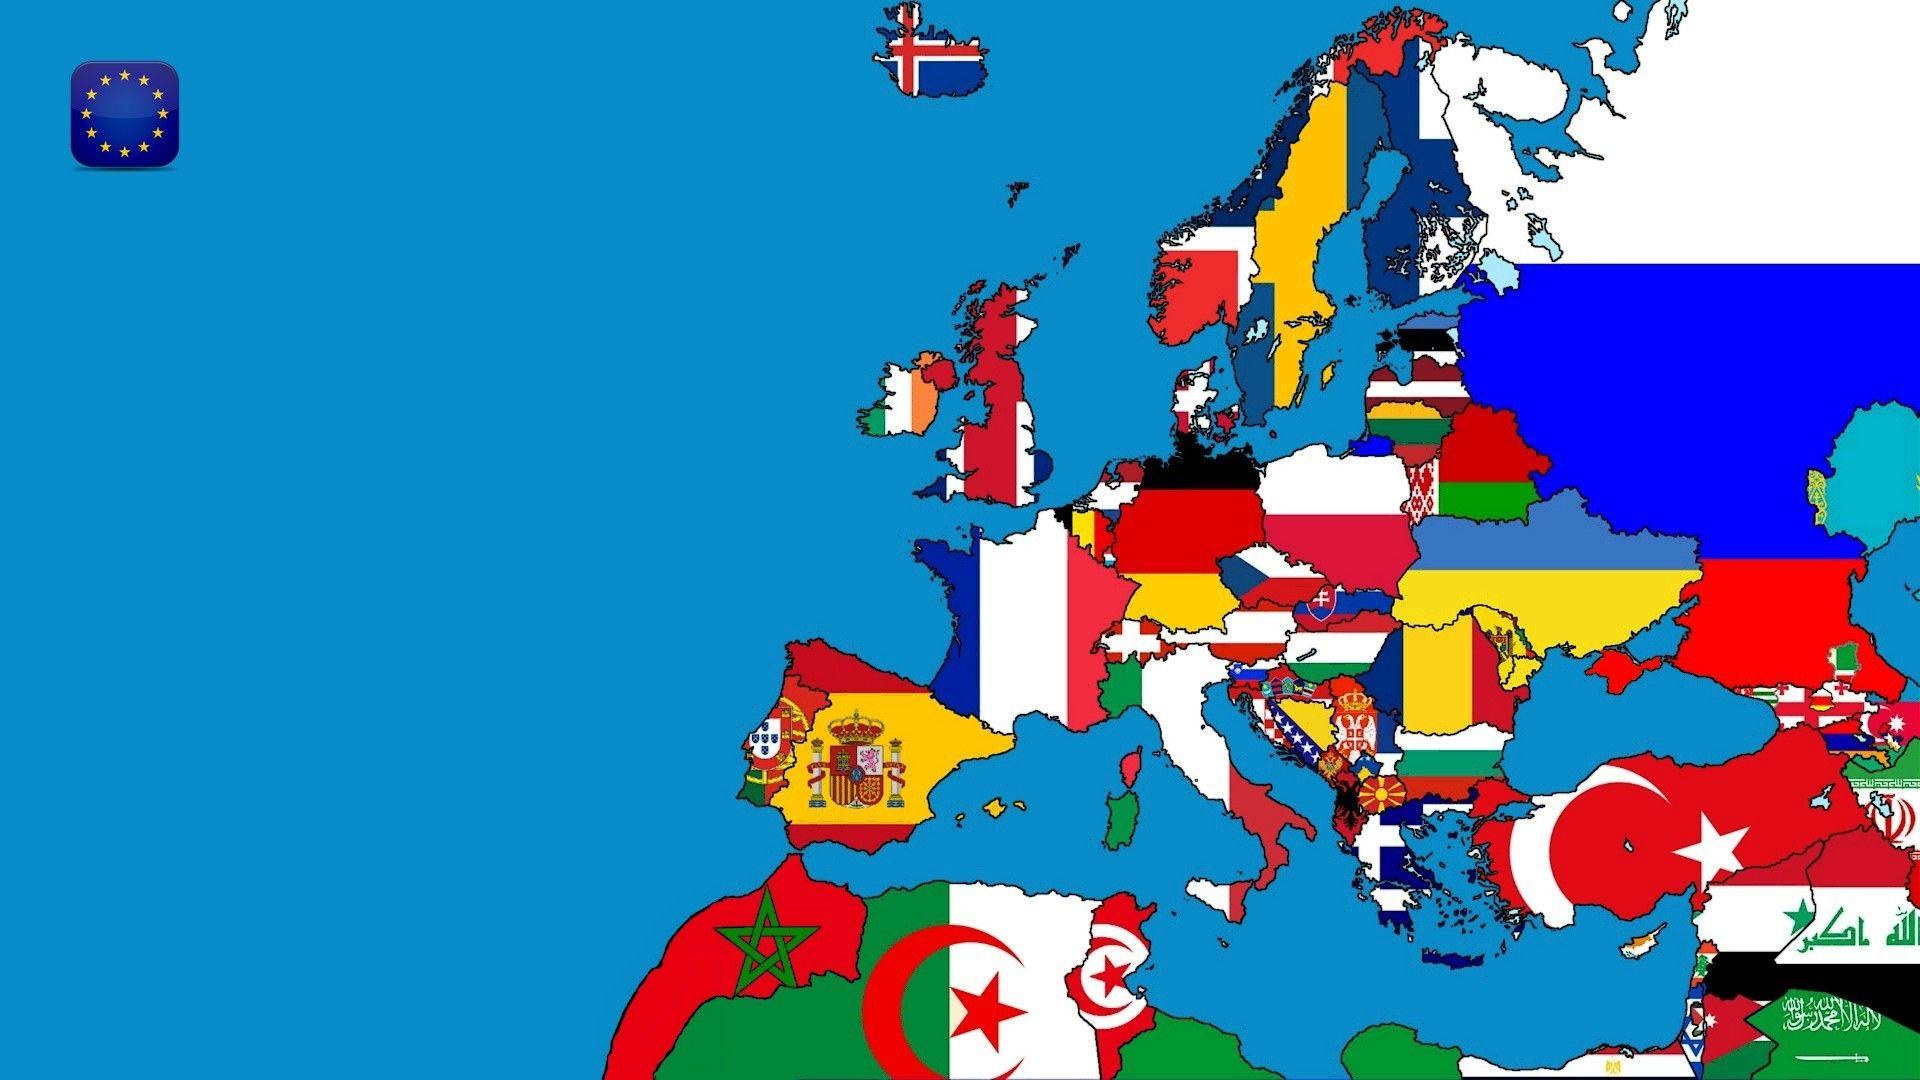 Wallpapers : illustration, sea, cartoon, flag, world, map, Europe